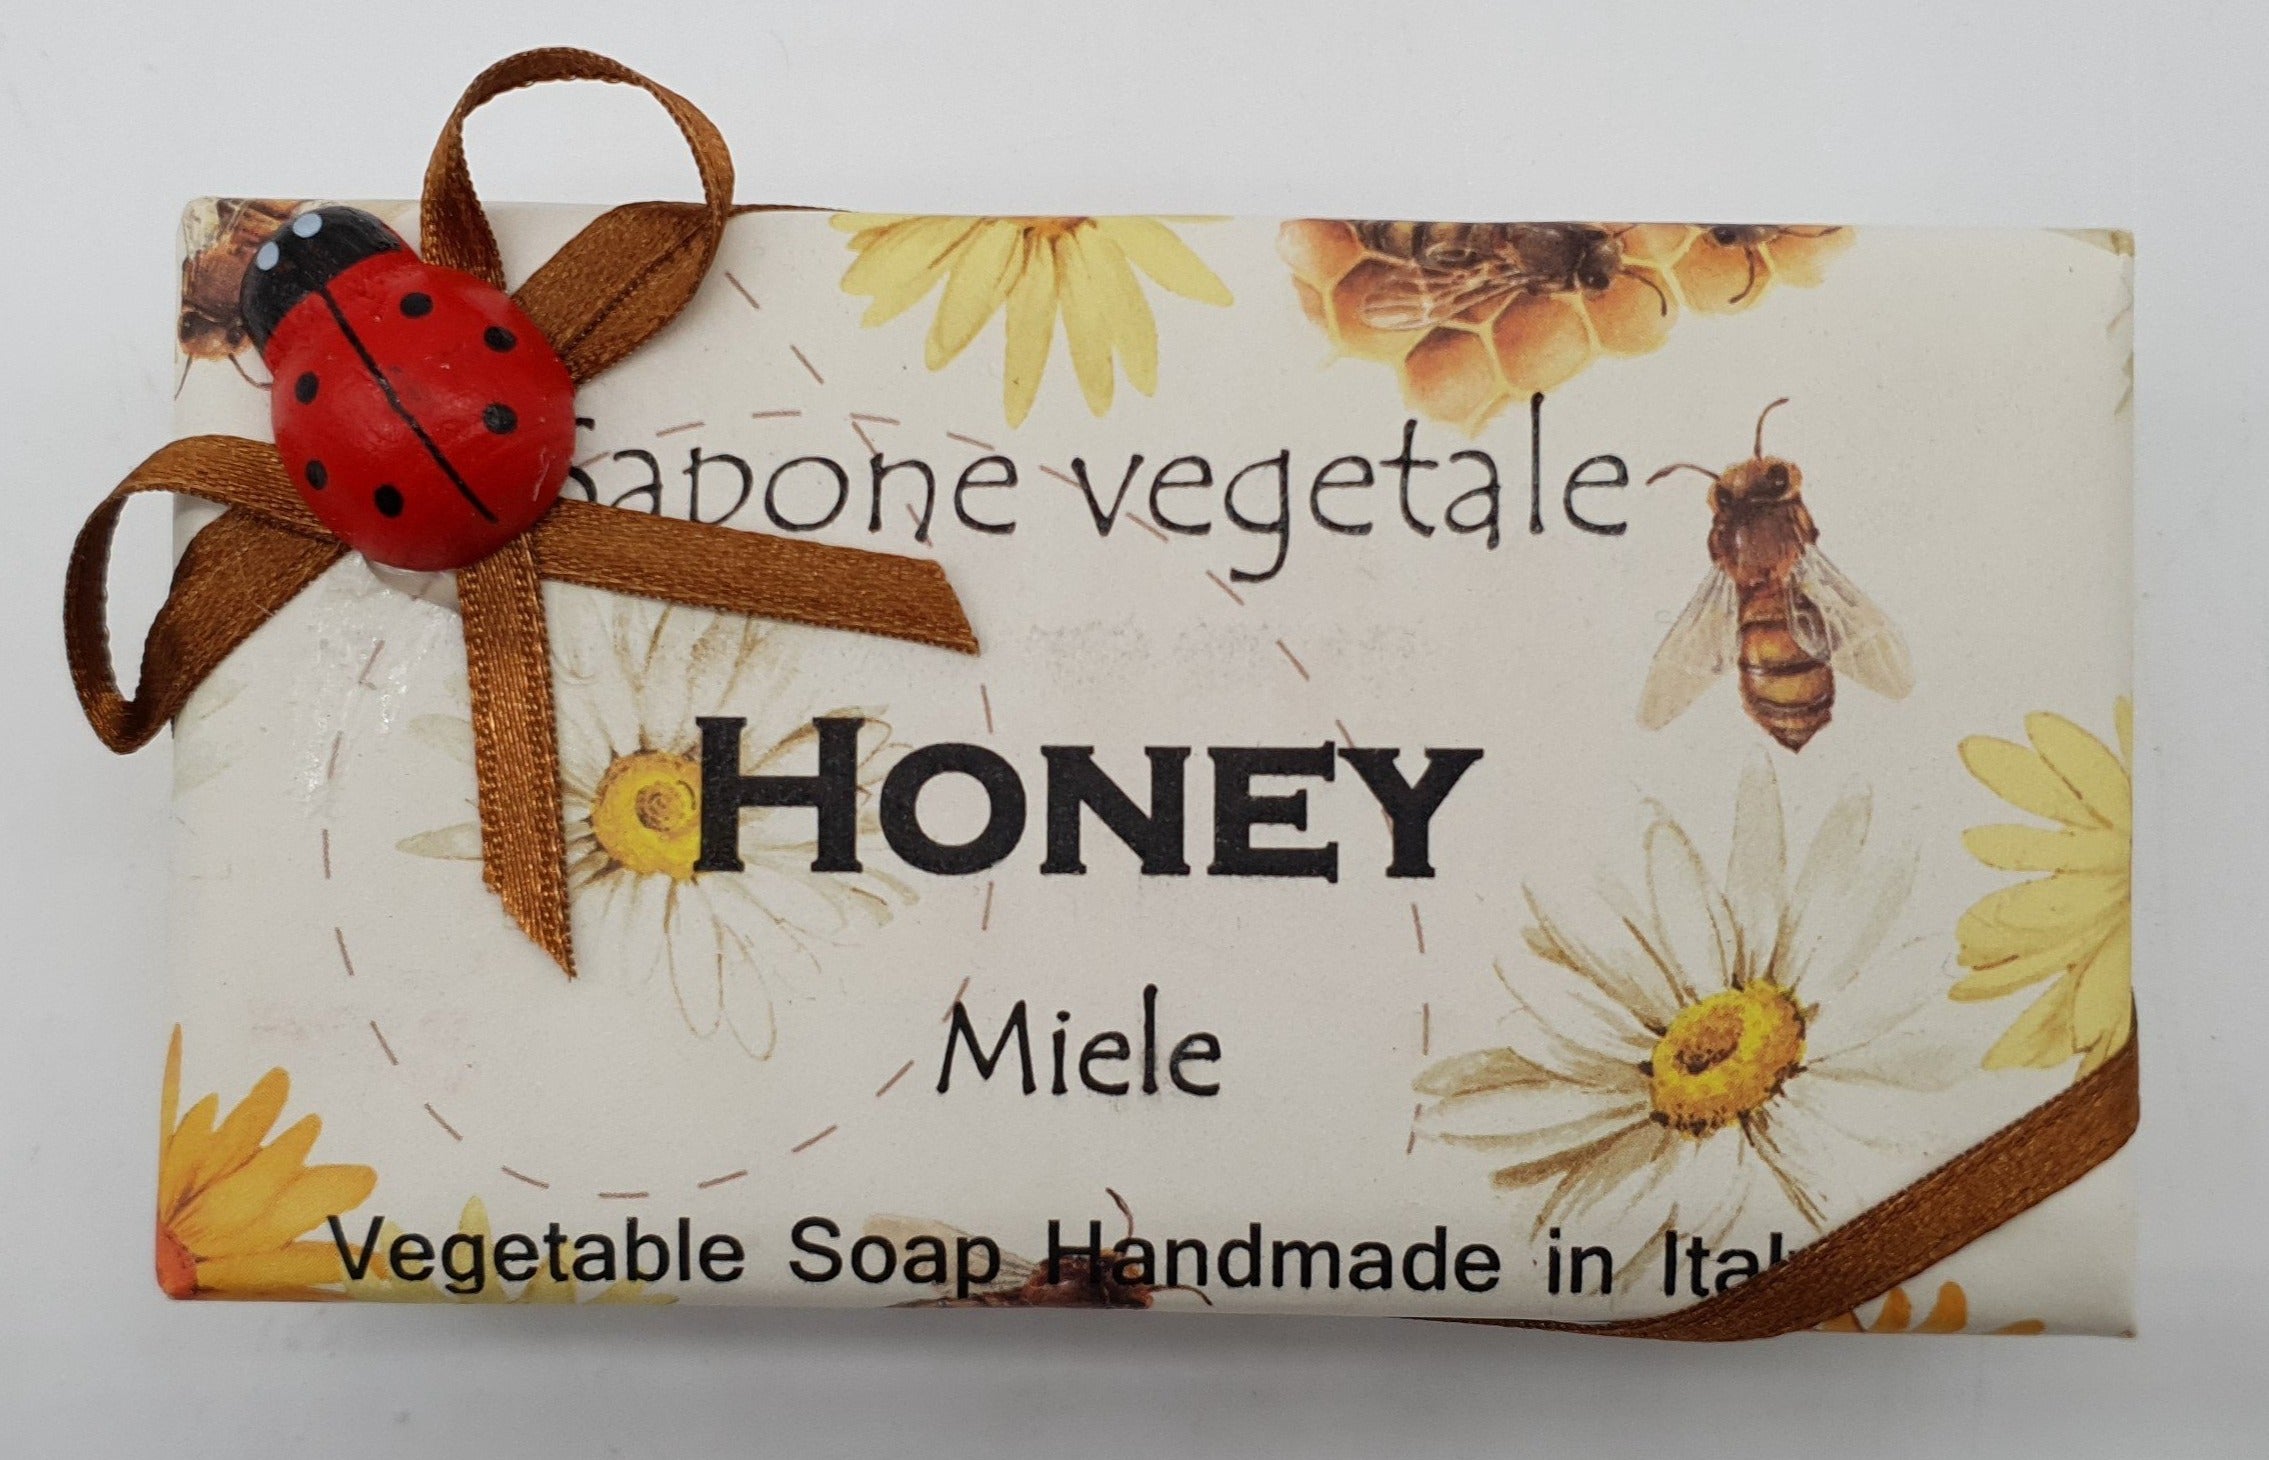 Sapone Vegetale Honey-Miele